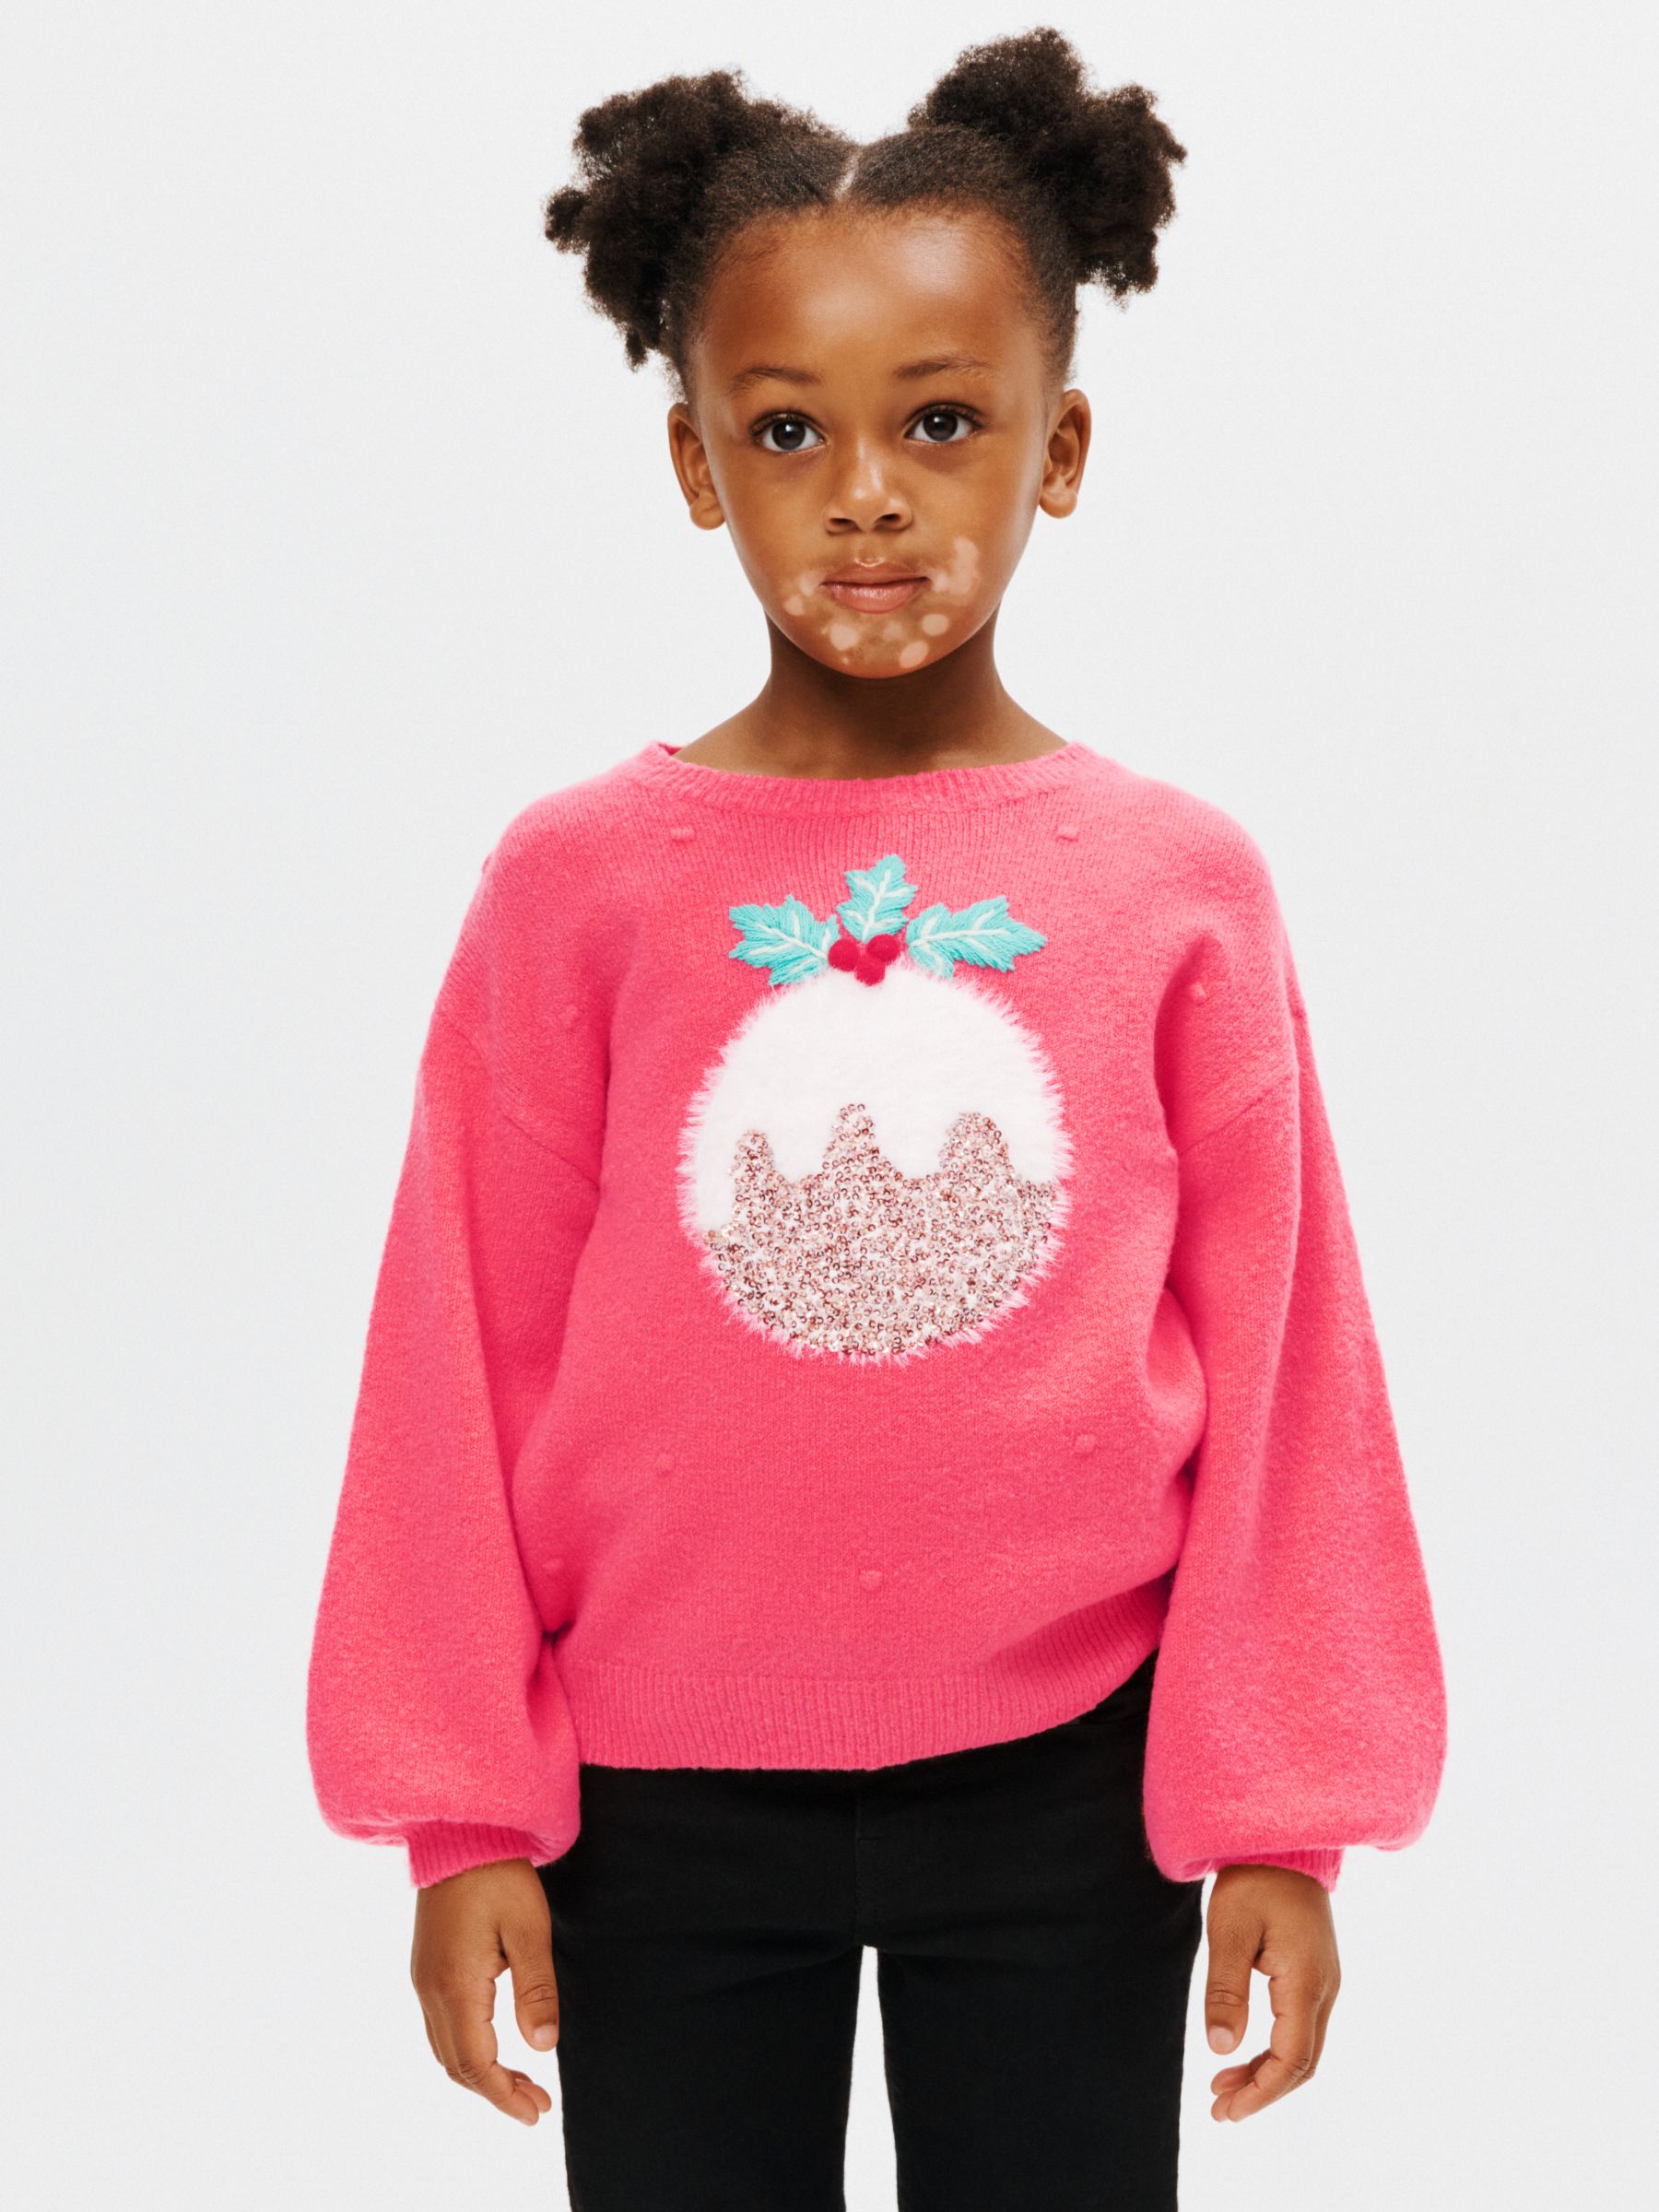 Toddler Baby Girl Boy Pullover Sweater Long Sleeve Cotton Tops Kids Knitt Sweatshirt Outwear Fall Winter Clothes 